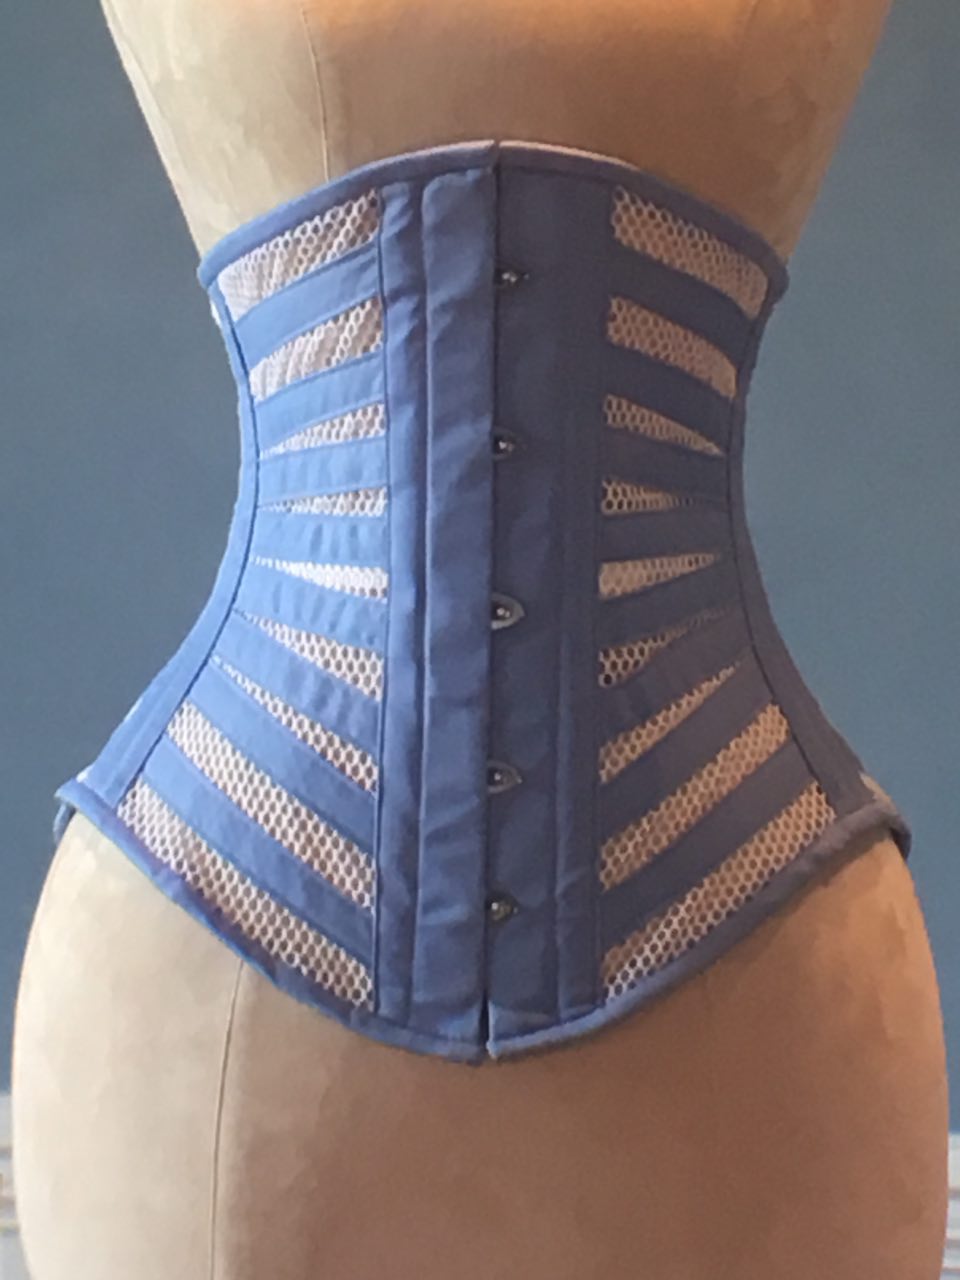 Dark Desire Black Mesh corset  high quality waist training corset